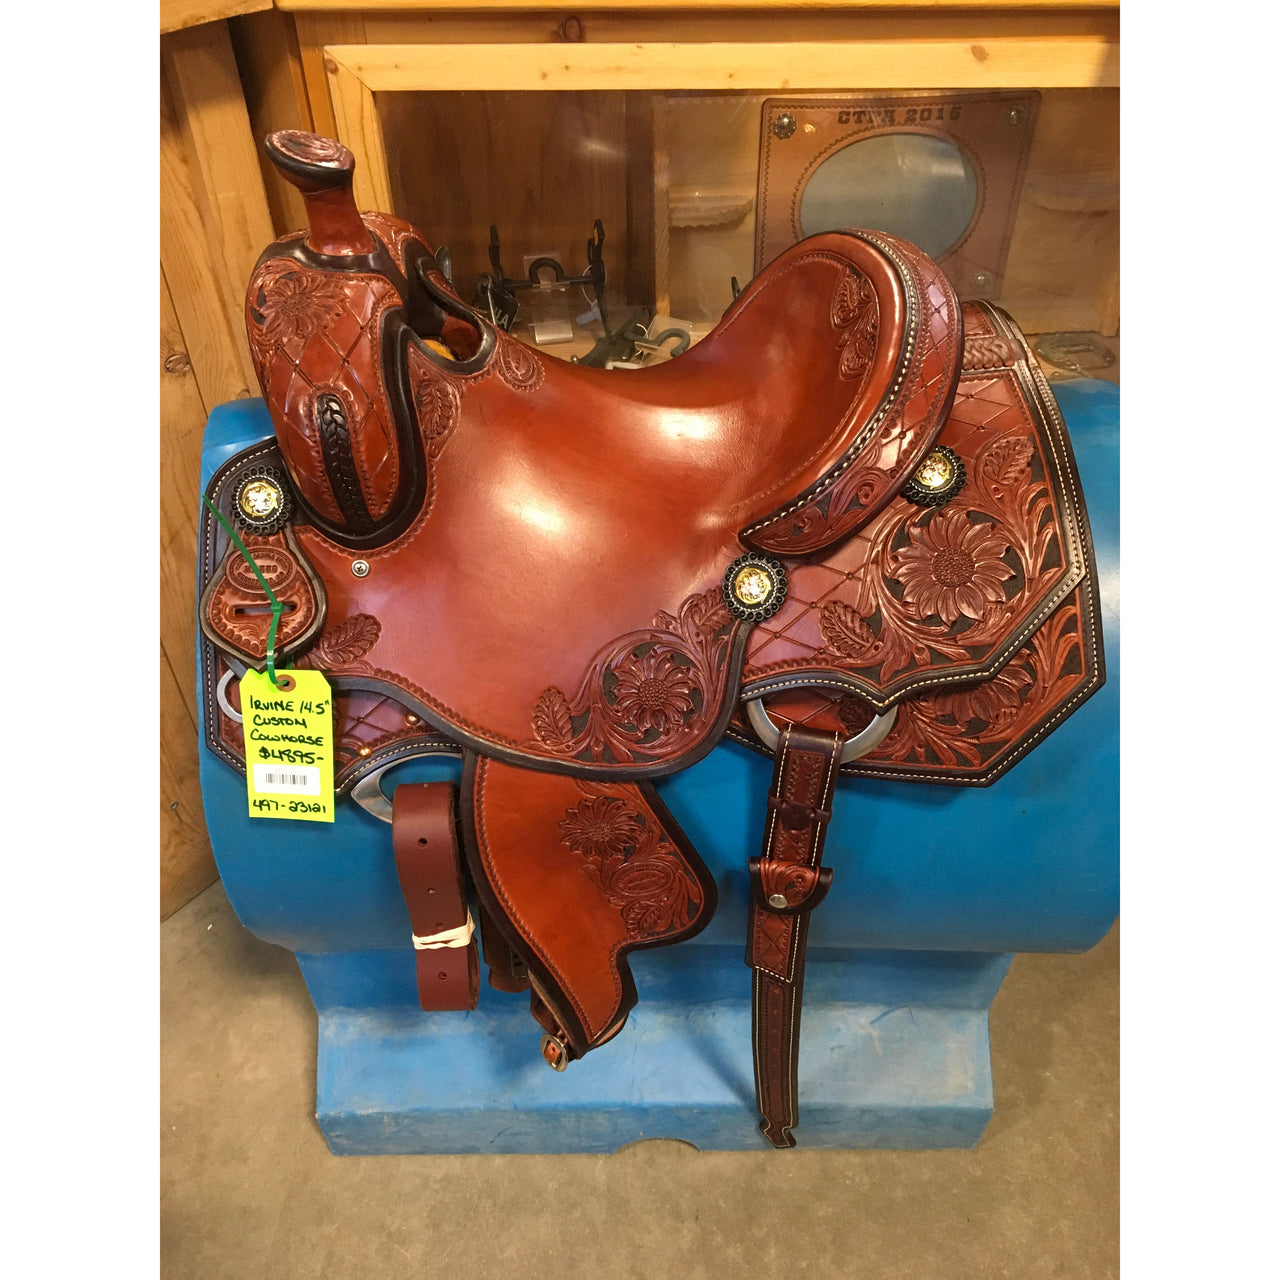 Irvine 14.5" Custom Cowhorse Saddle